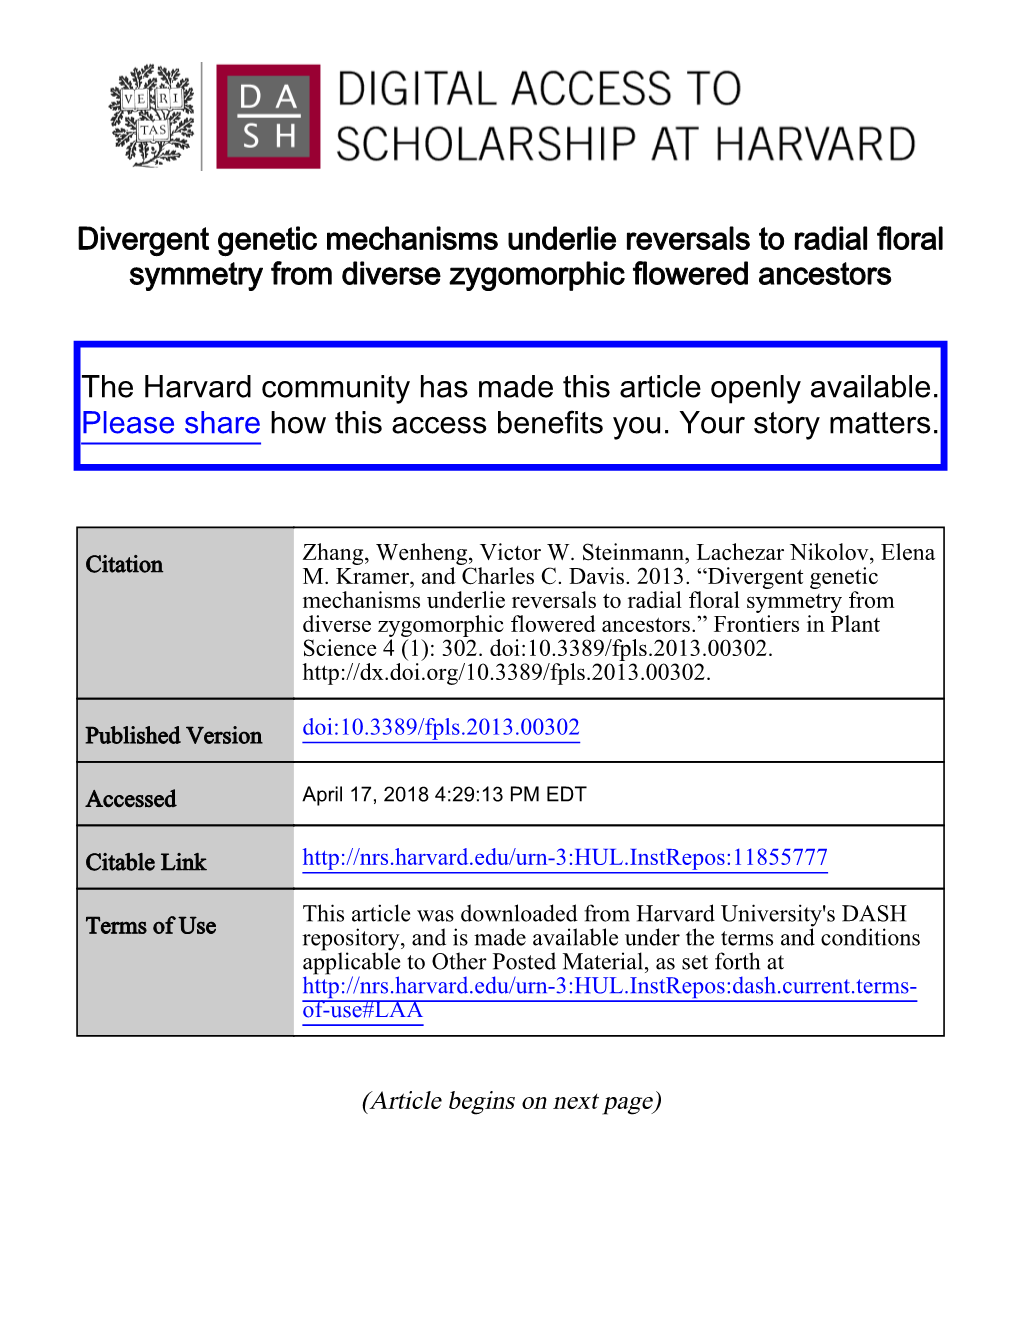 Divergent Genetic Mechanisms Underlie Reversals to Radial Floral Symmetry from Diverse Zygomorphic Flowered Ancestors